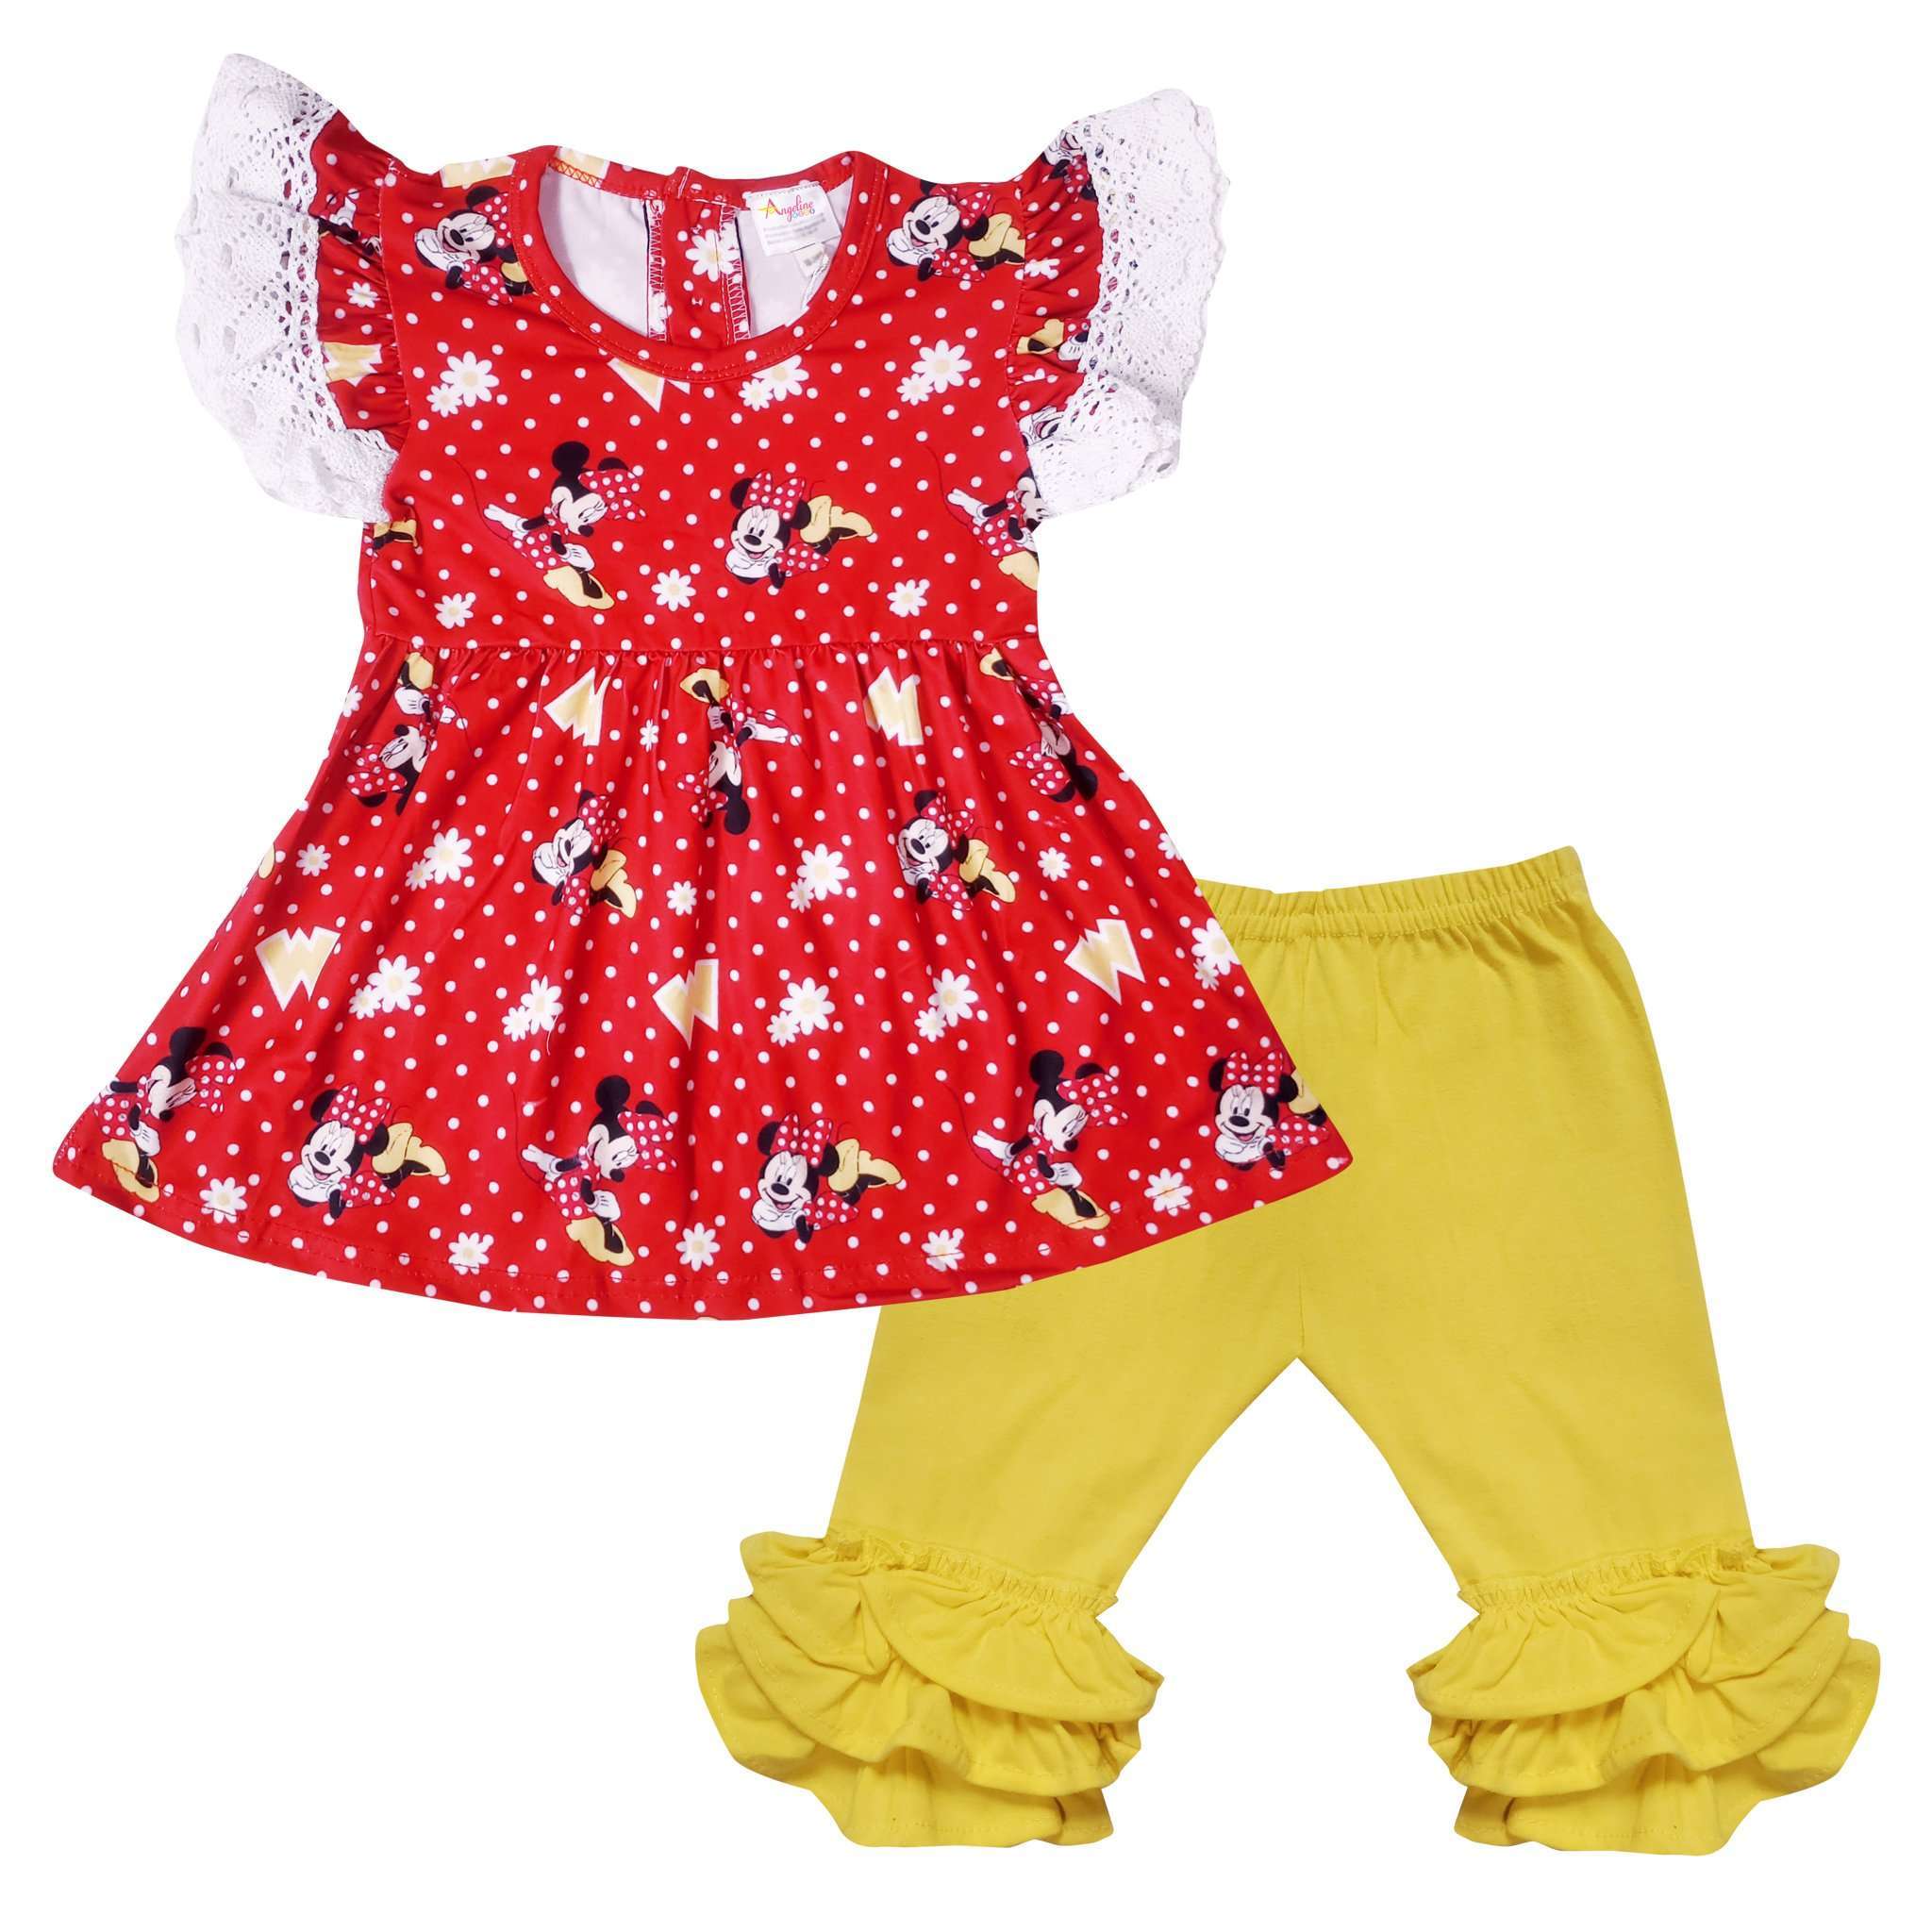 Angeline Kids:Baby Toddler Little Girls Disney Character Minnie Mouse Daisy Capri Set